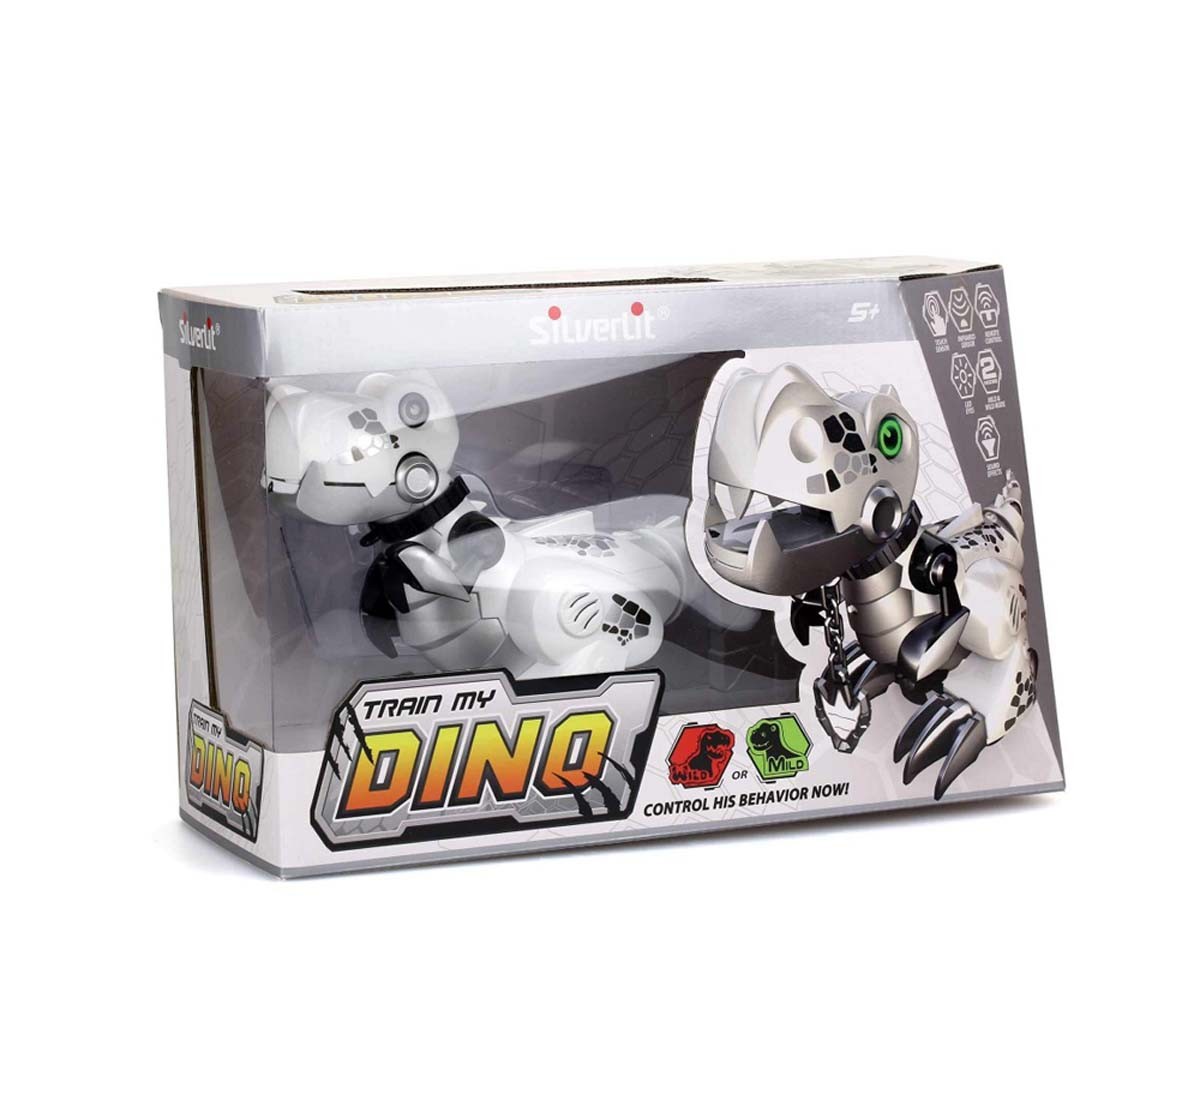 Silverlite Train My Dino White Robotics for Kids age 5Y+ 